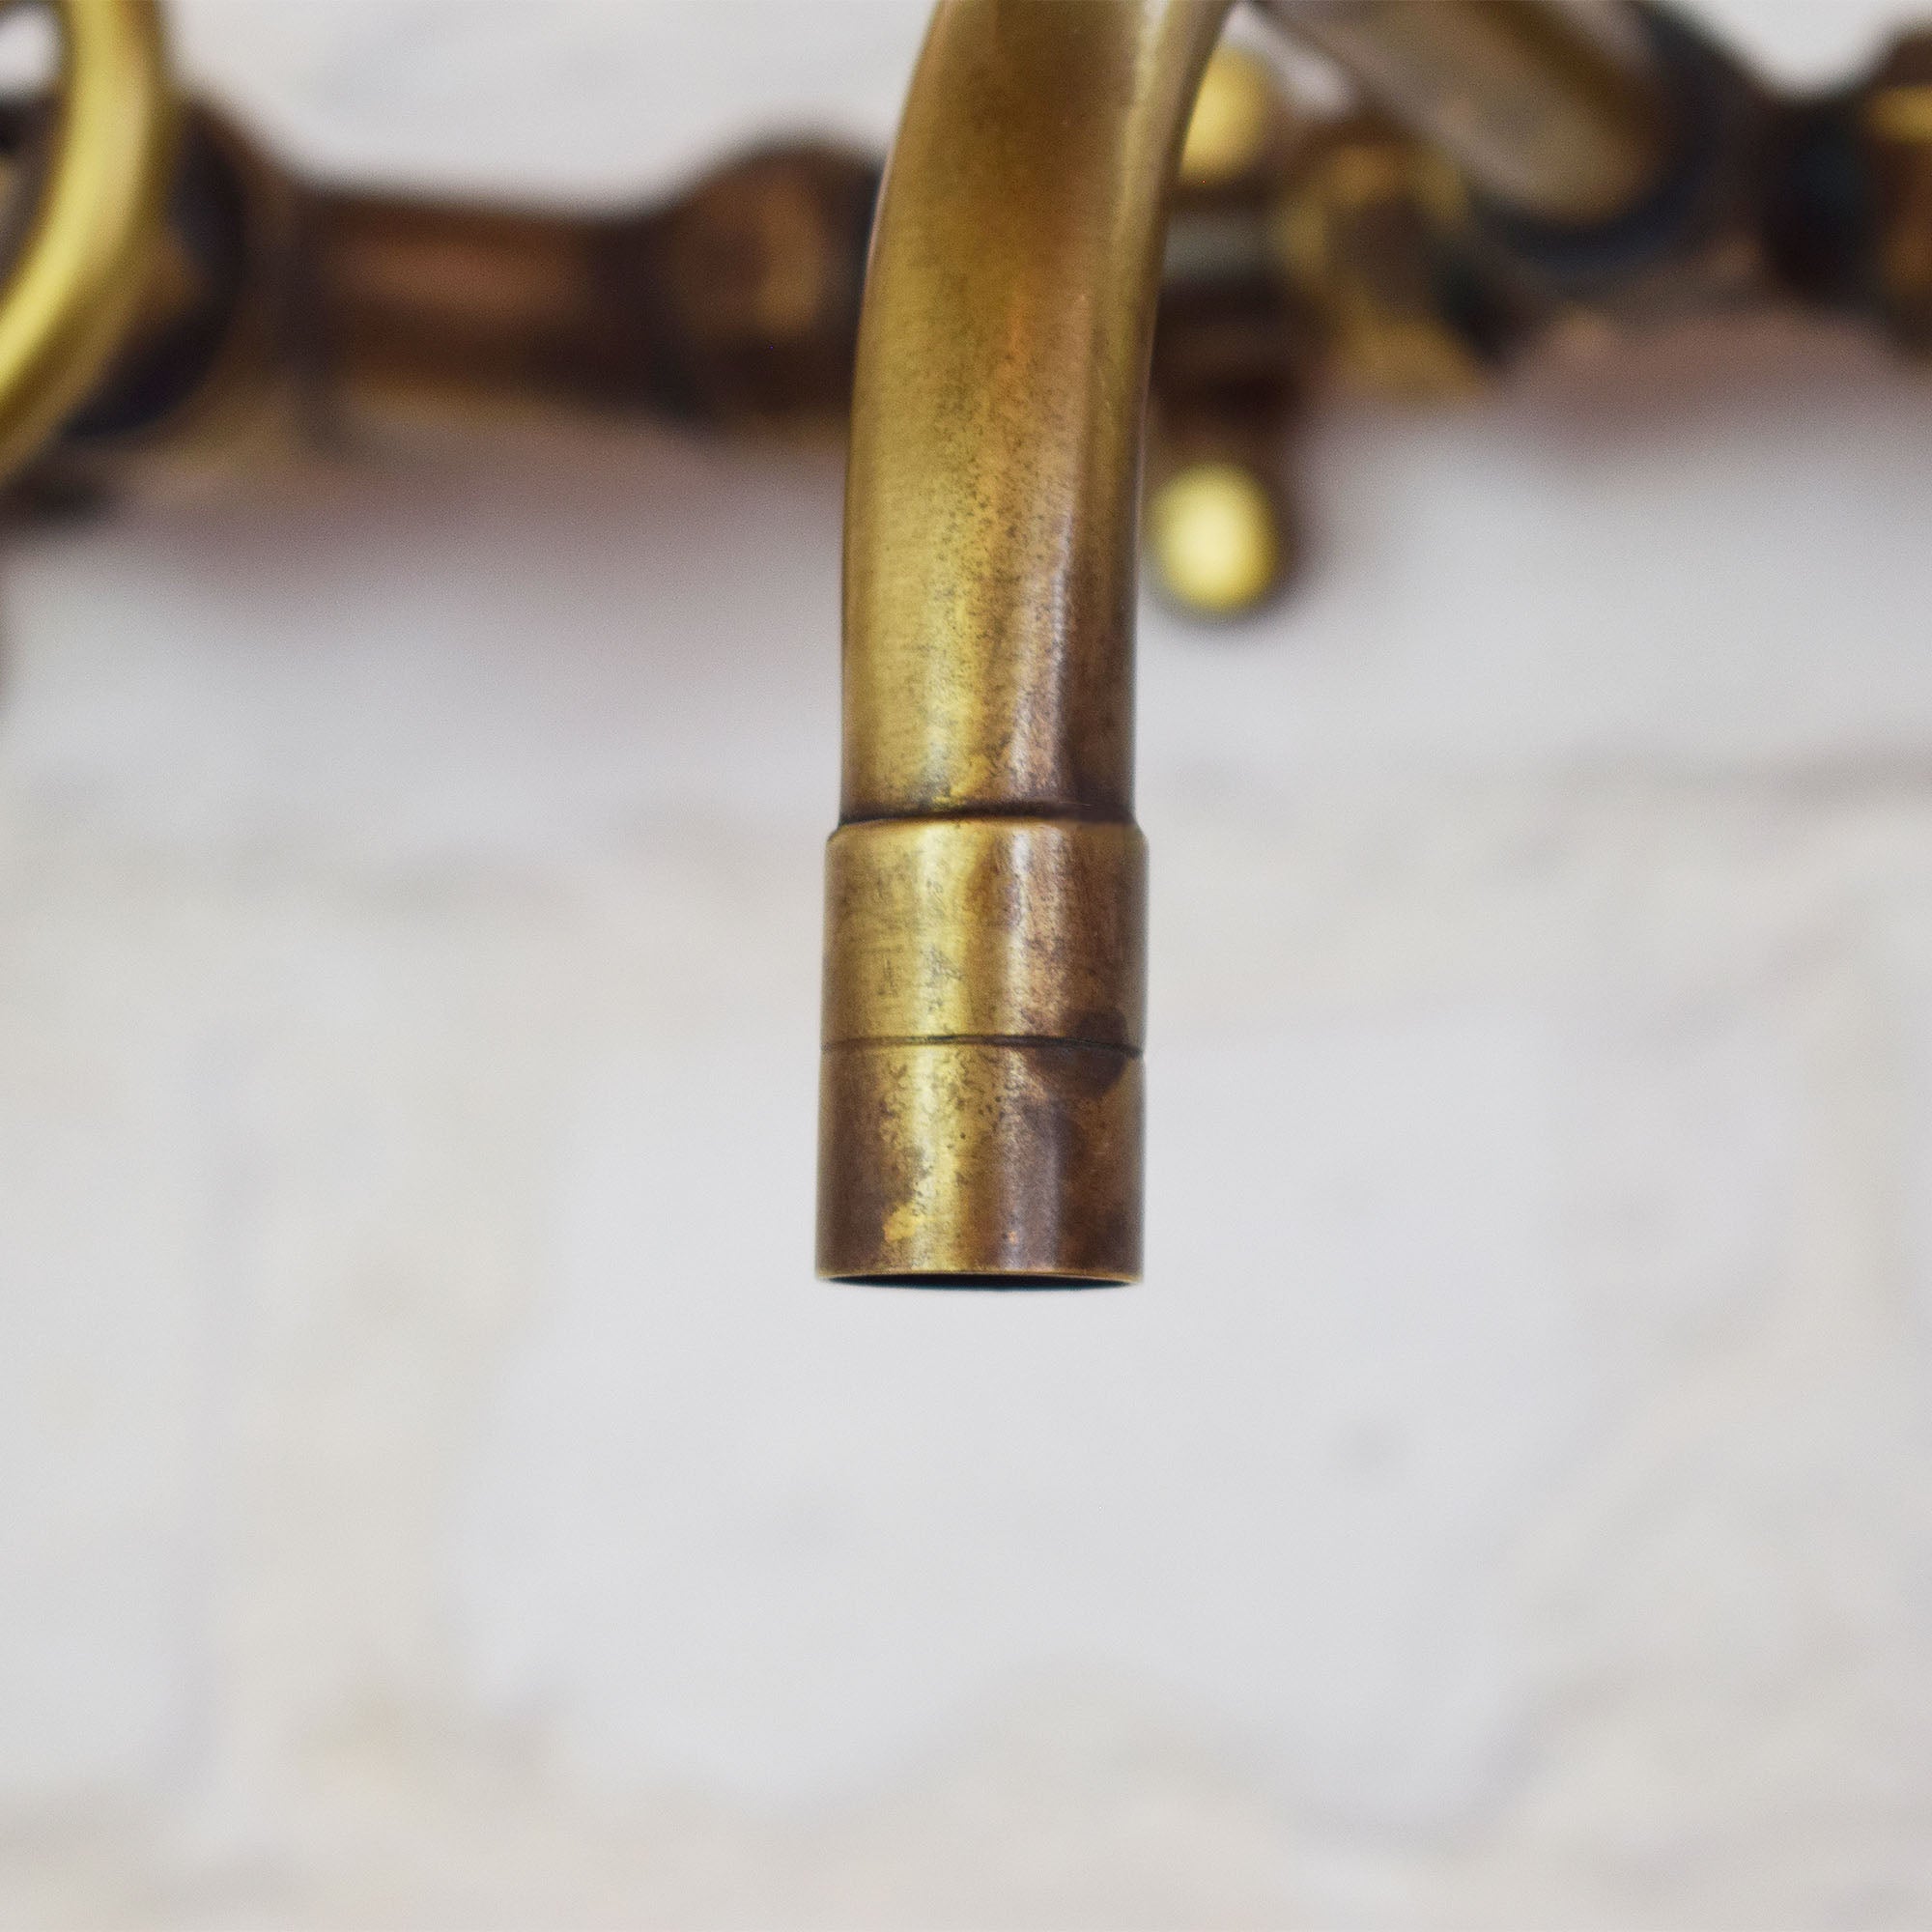 Farmhouse Vintage Brass Tap spout closeup